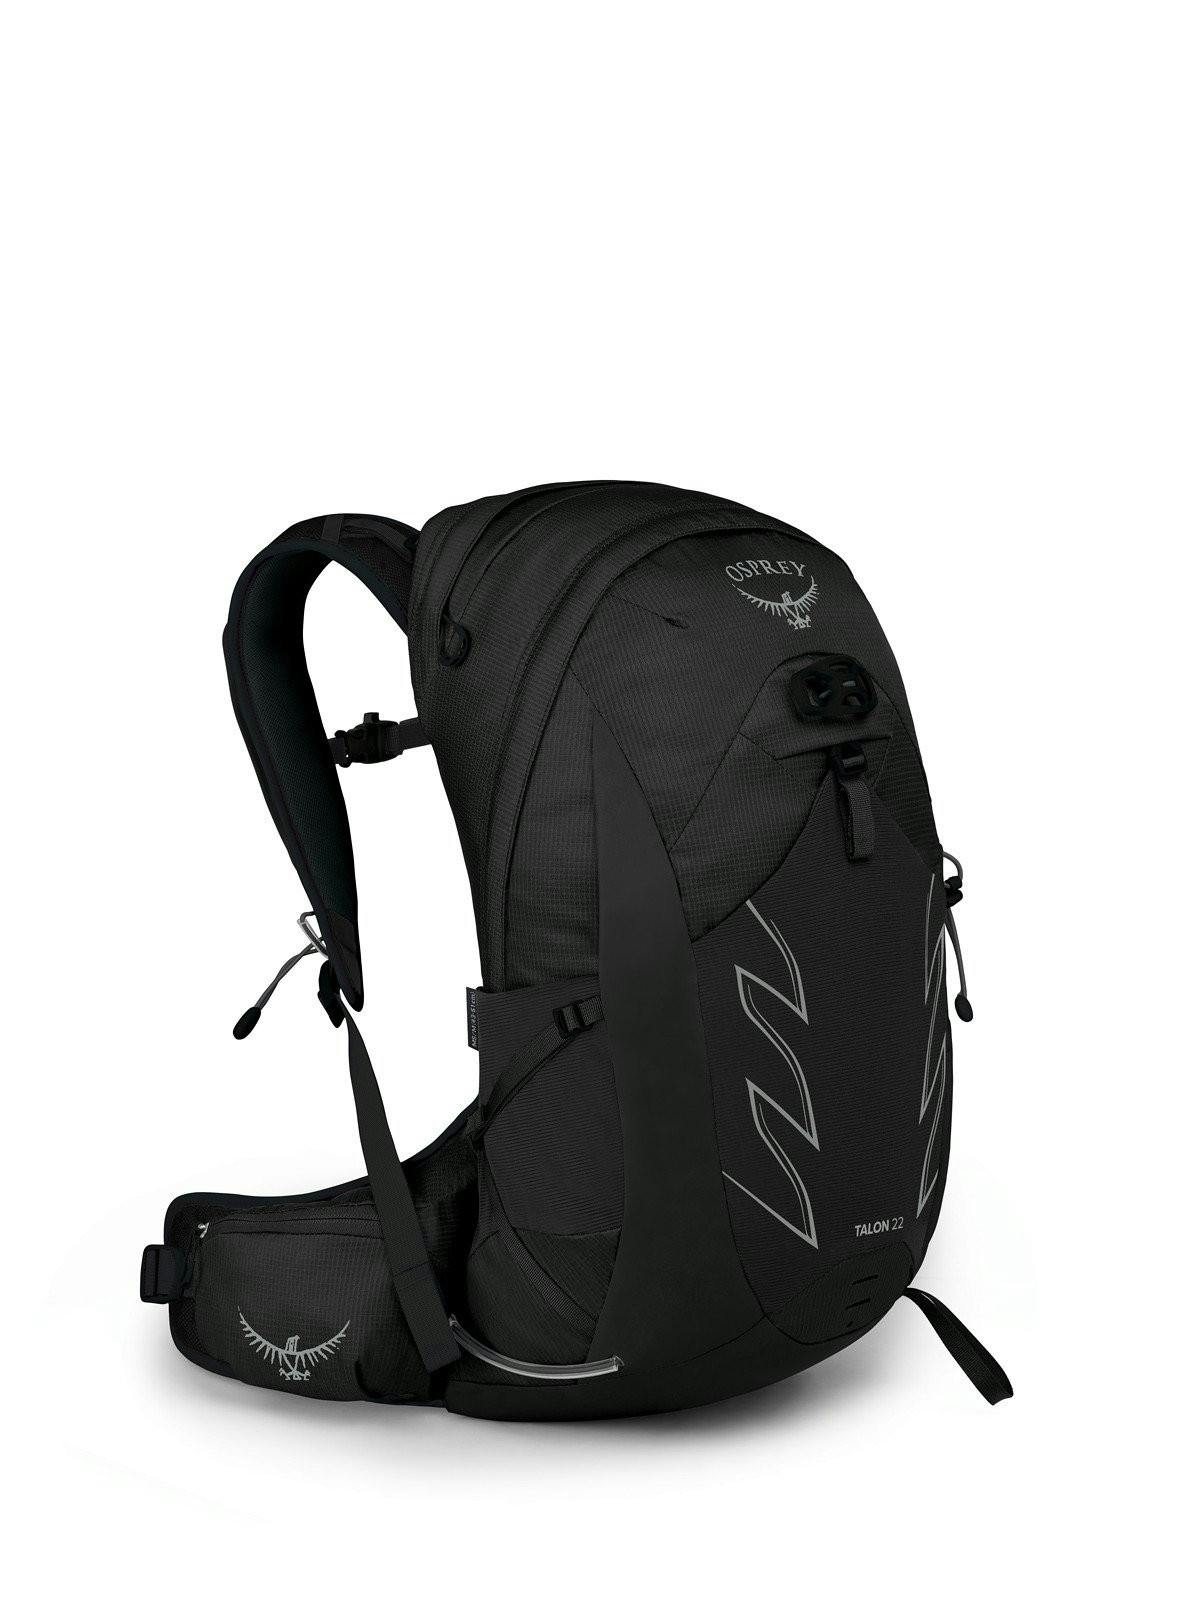 Osprey Talon 22 Backpack- Men's